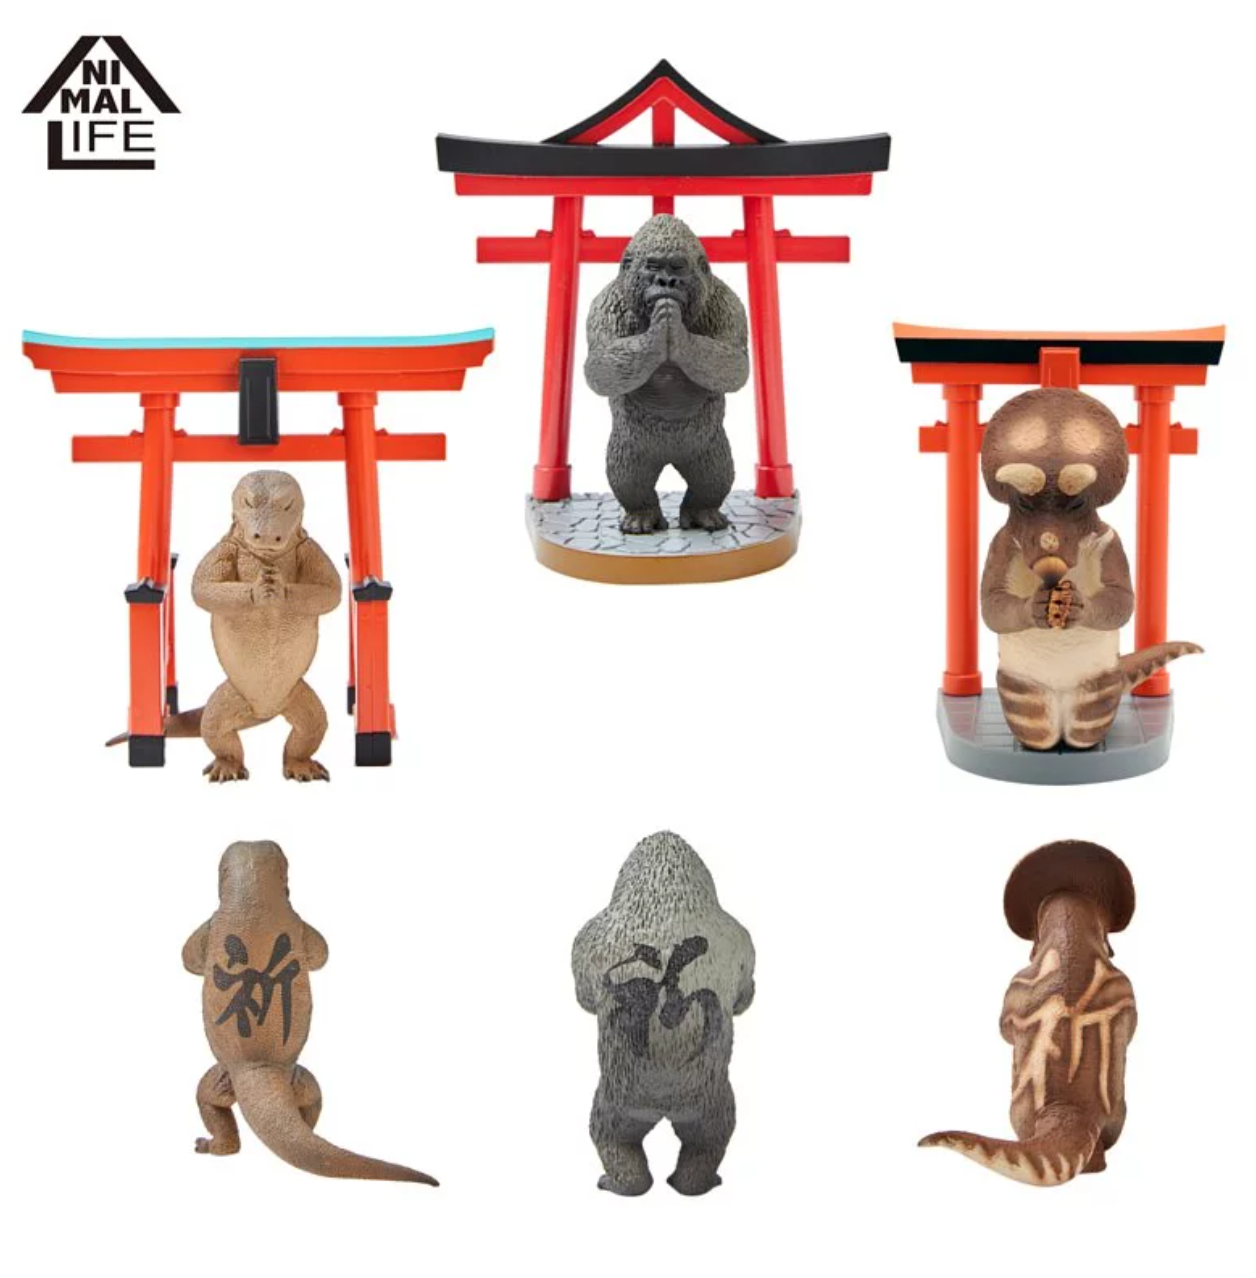 Asakuma Toshio Taiwan Limited Animal Life Gashapon Prayer Wish Speical 3 Trading Figure Set